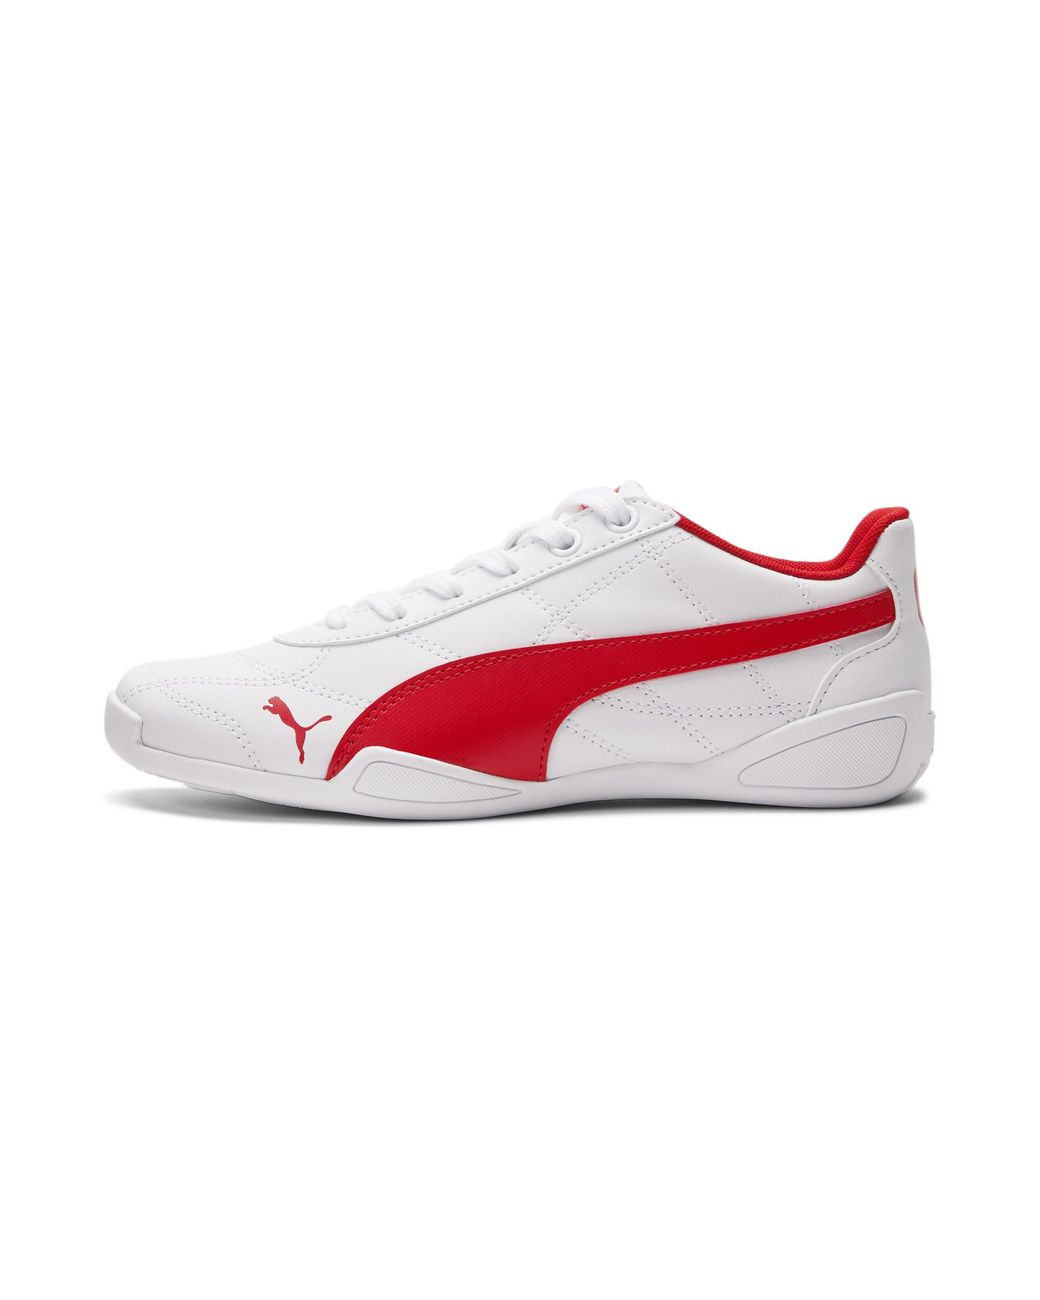 PUMA Tune Cat 3 Shoes Jr in Red | Lyst